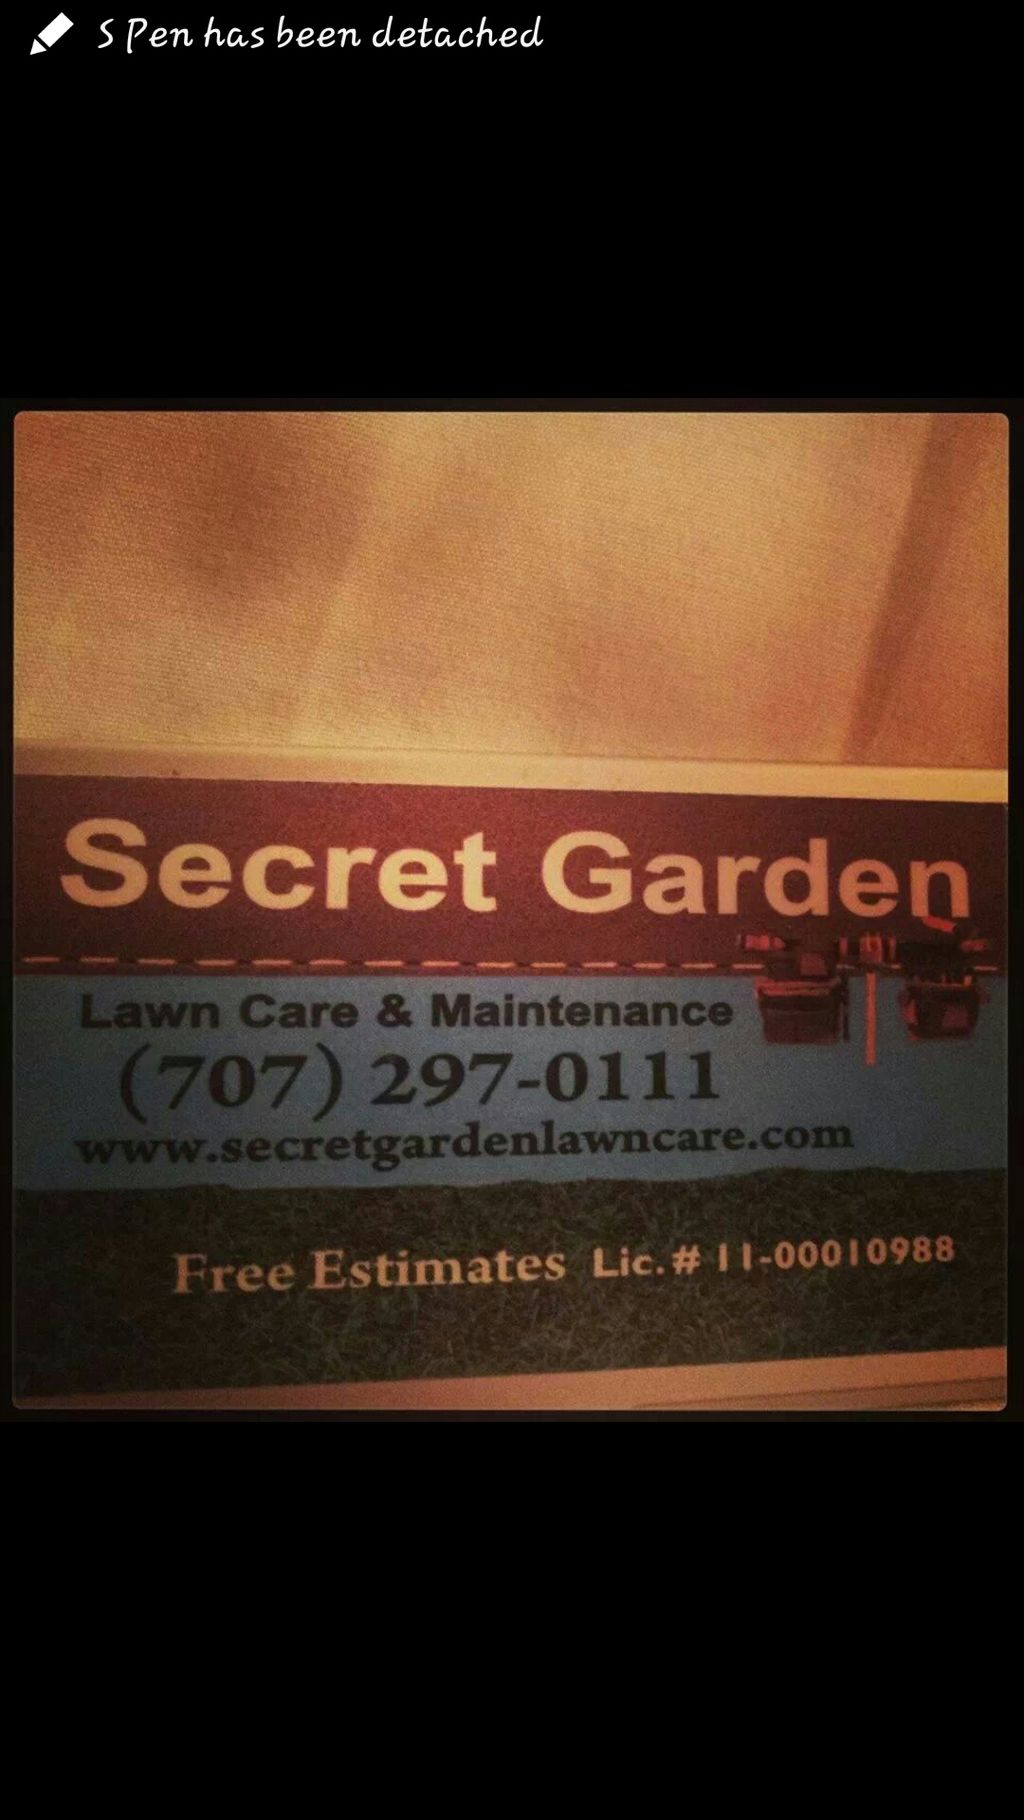 Secret Garden Lawn Care & Maintenance